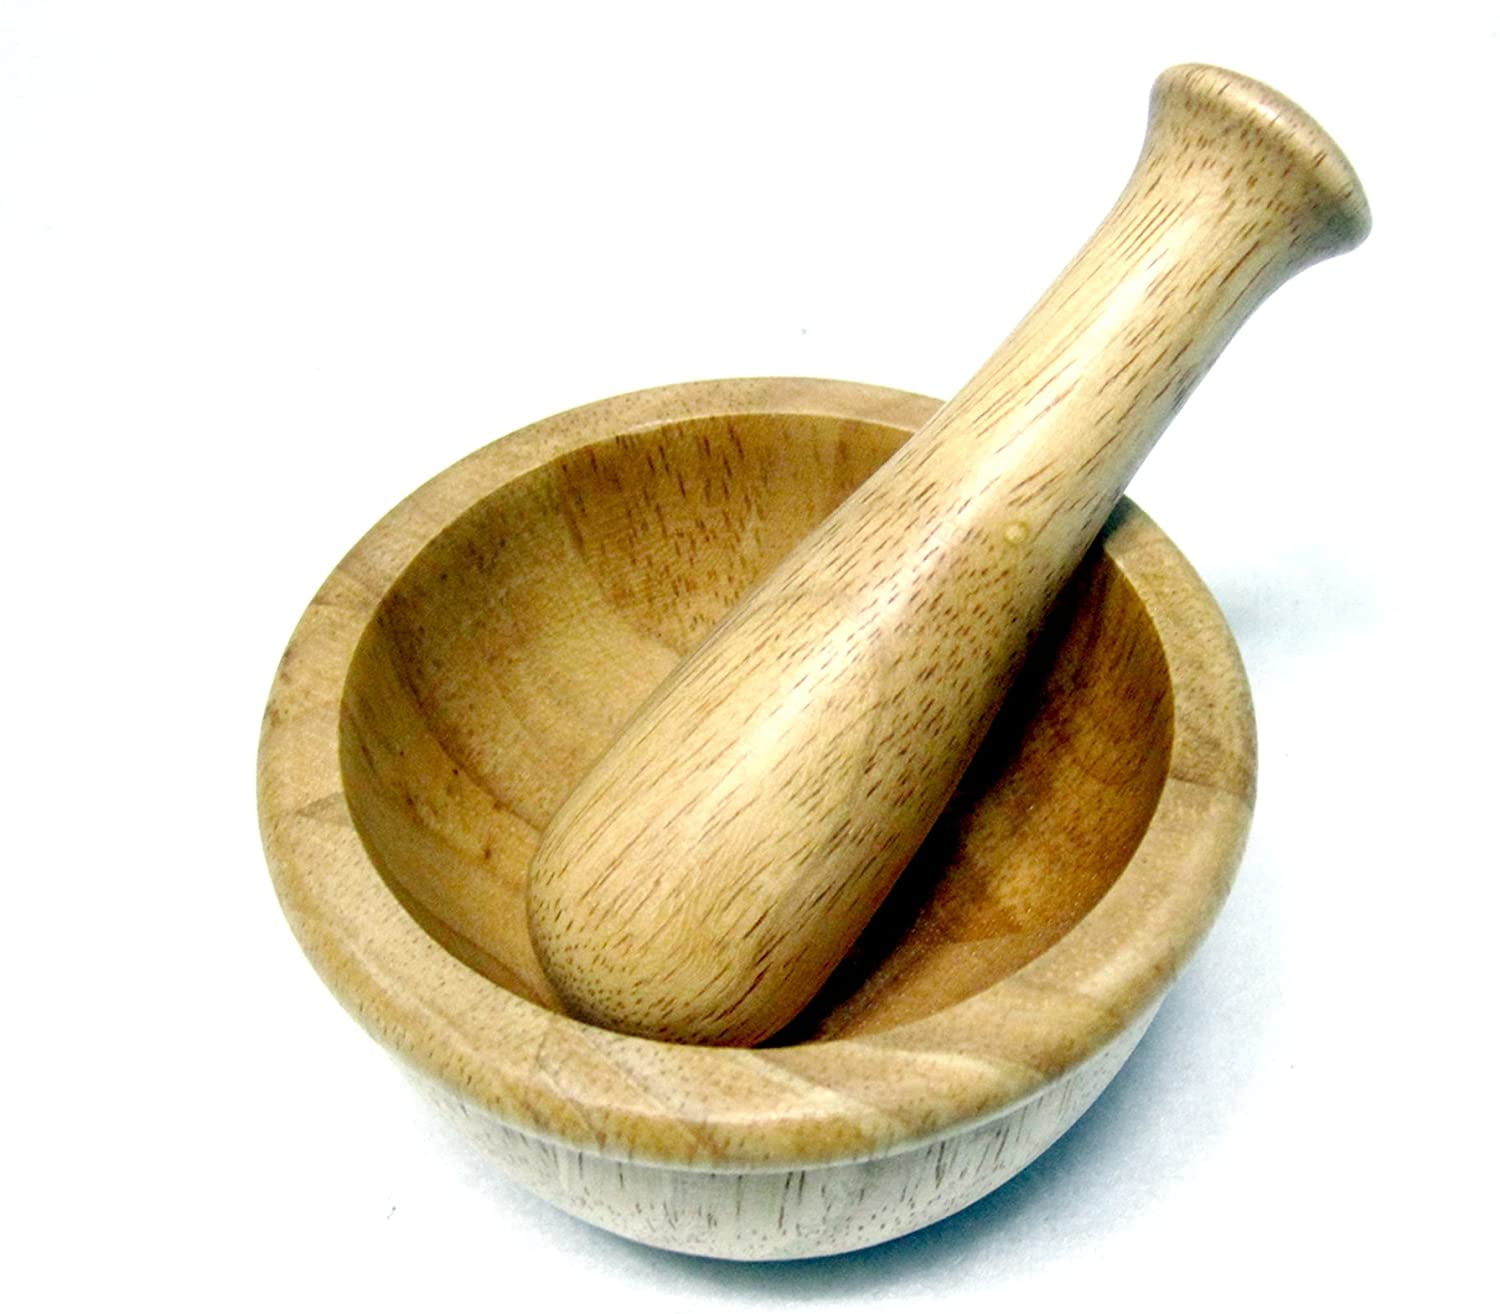 11cm x 11cm Saim Wooden Mortar & Pestles Functional Seasoning & Spice Tools Grinding Bowl Set Garlic Mud Pepper Grinder Crush Pot Kitchen Accessory for Home Cooking Tool 